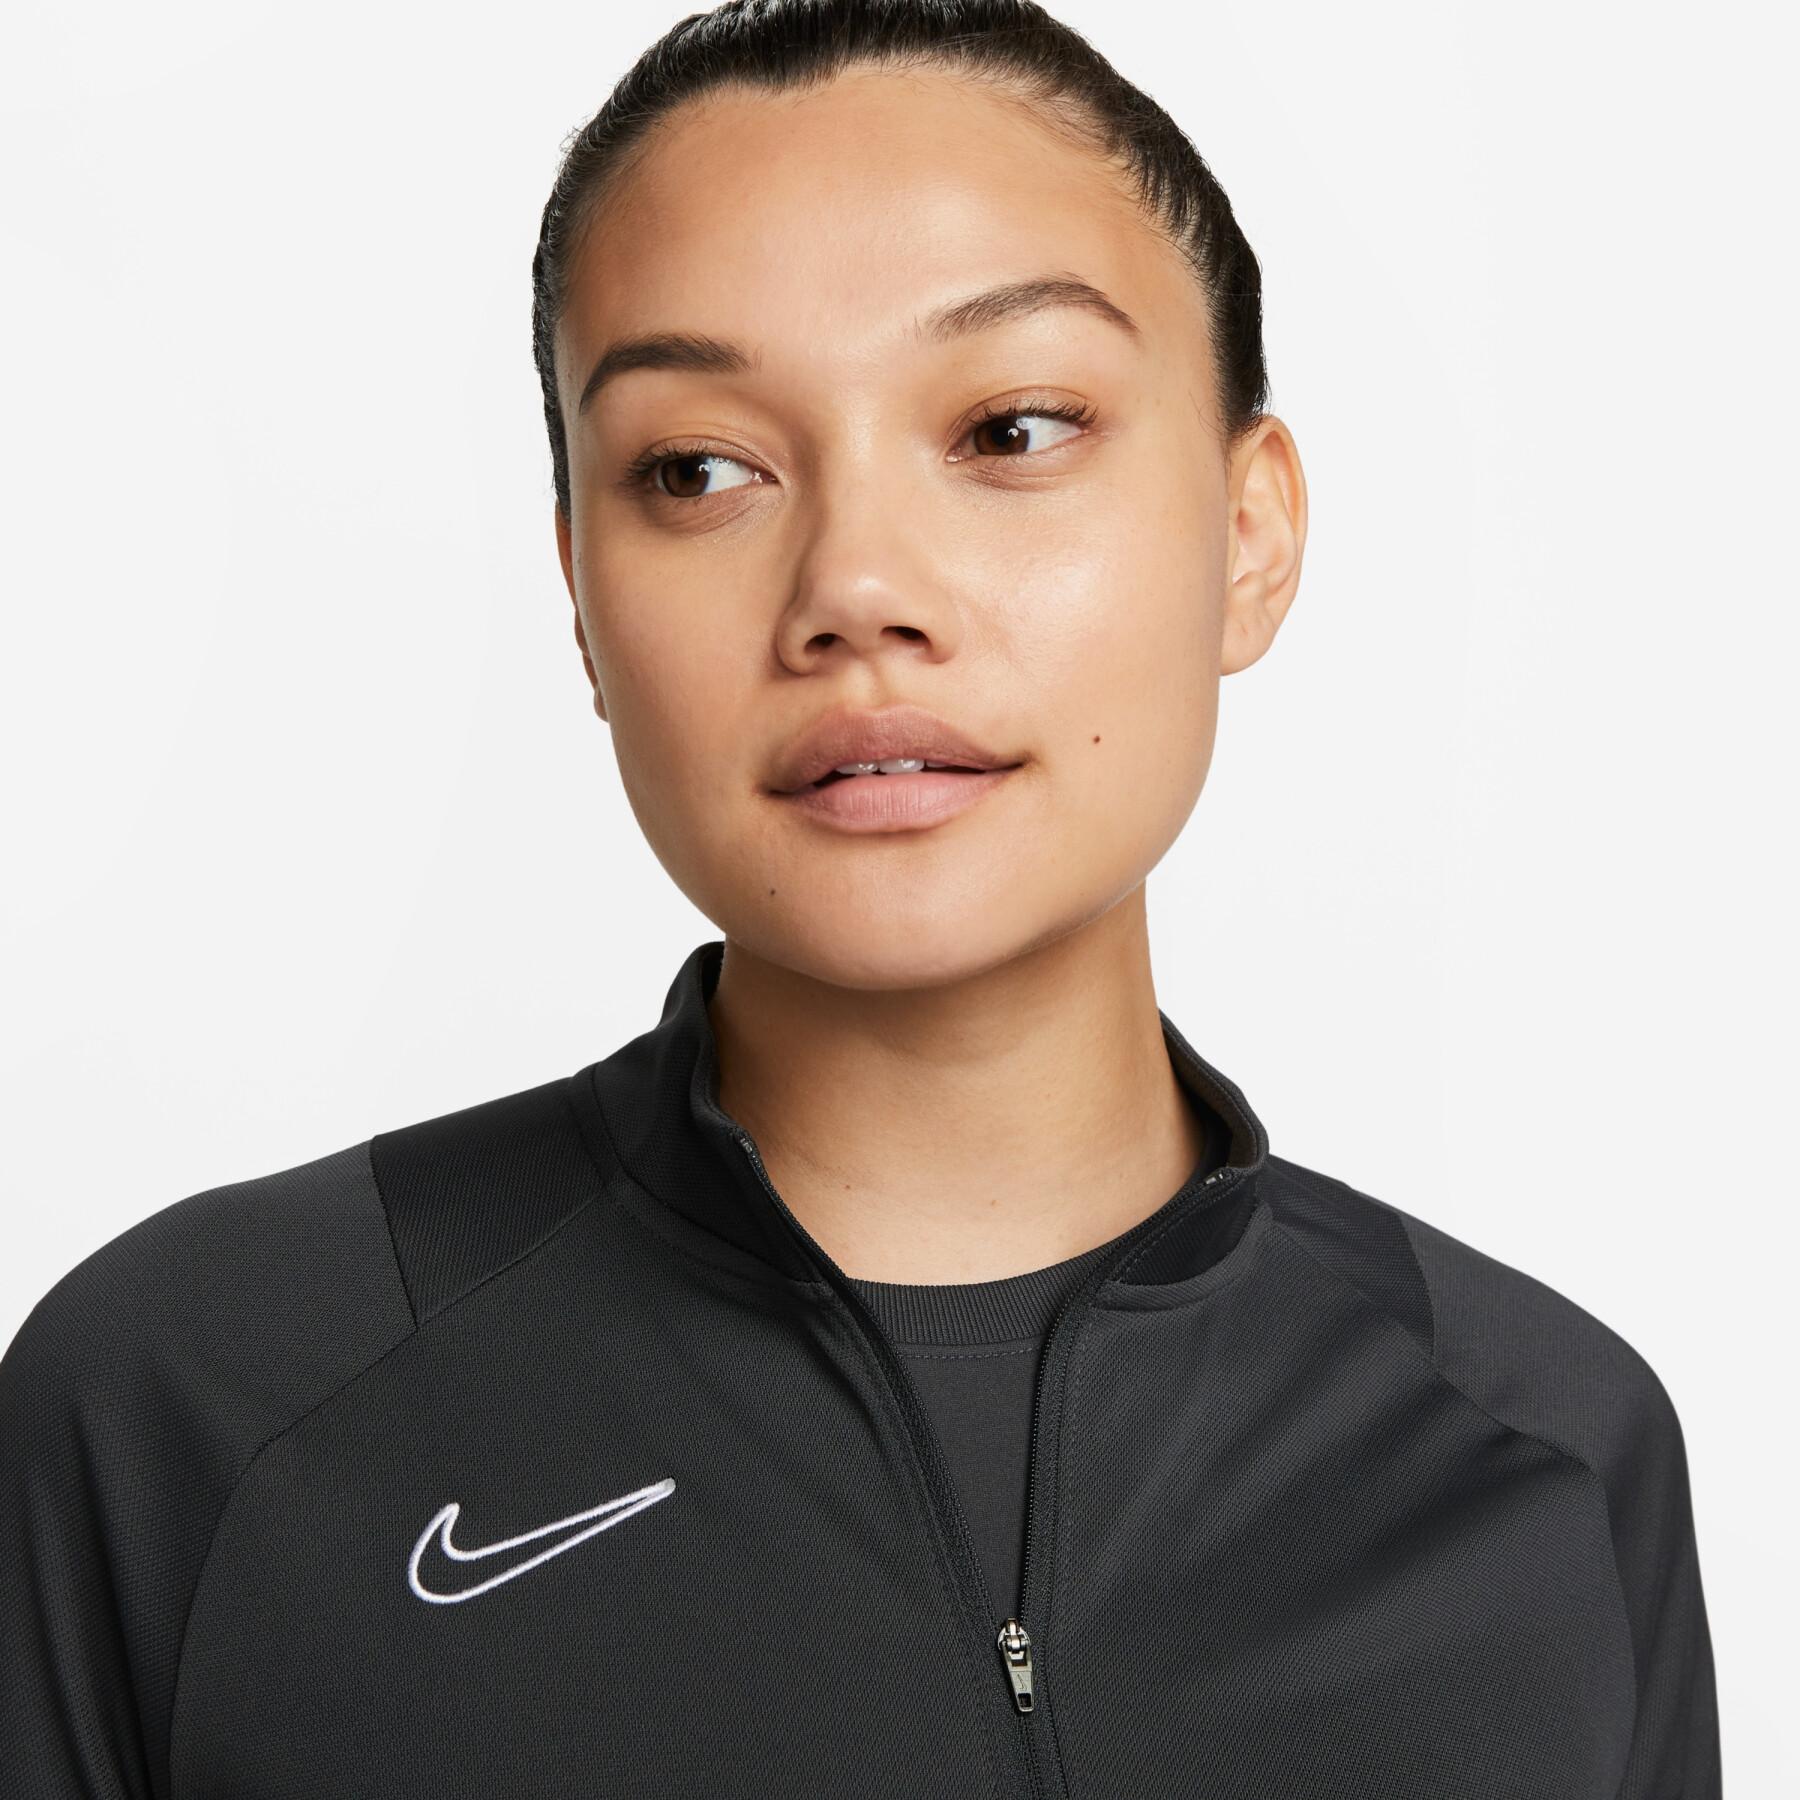 Women's tracksuit Nike Dry Academy